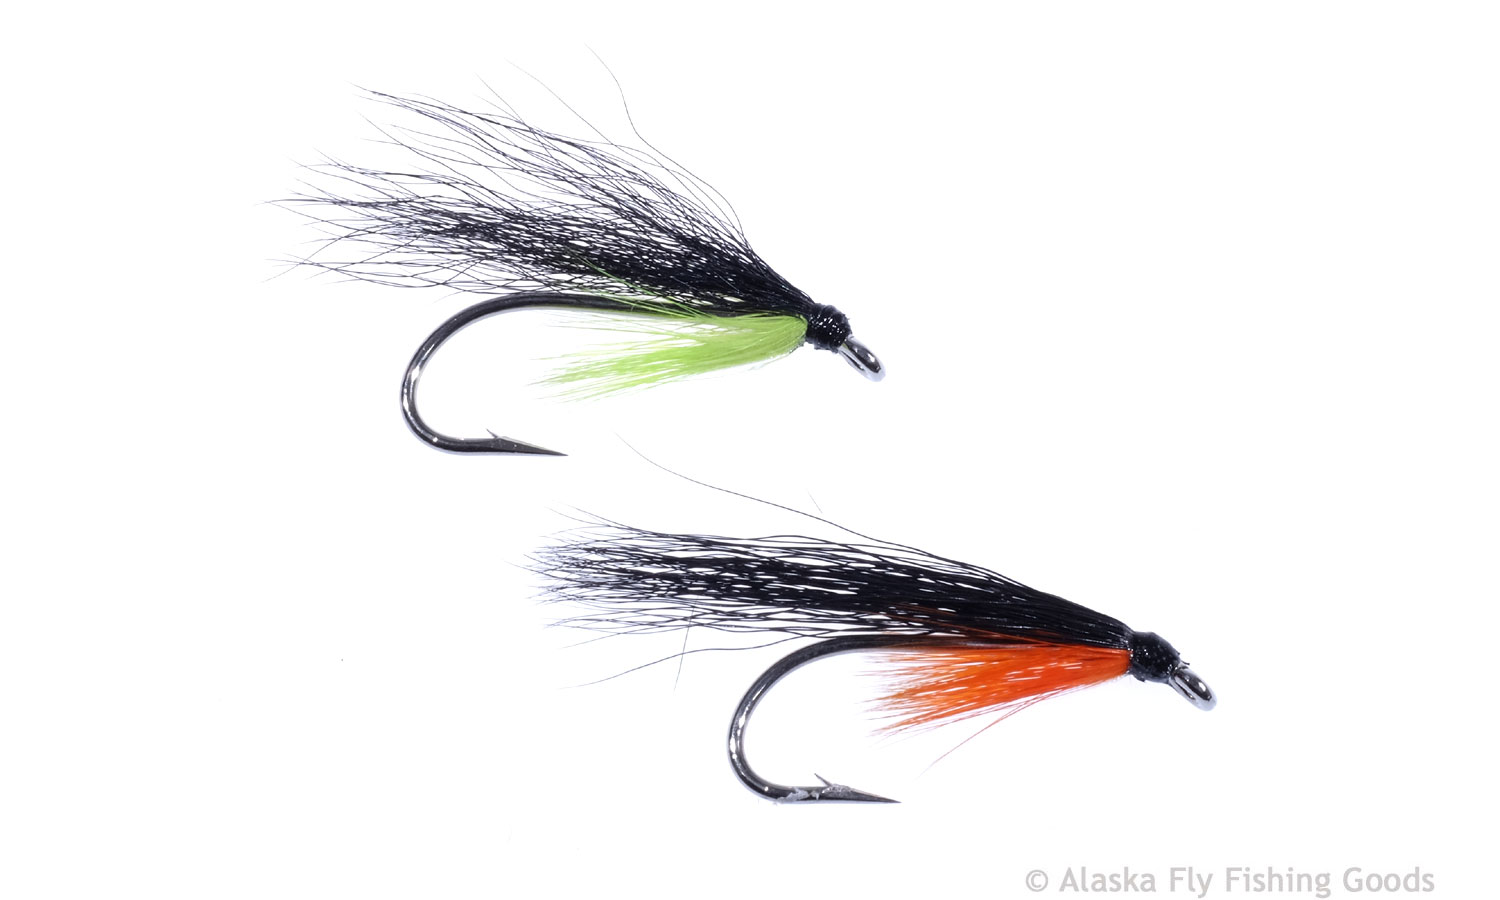 Rio Flies Alaska Salmon Assortment - Flies for Fly Fishing